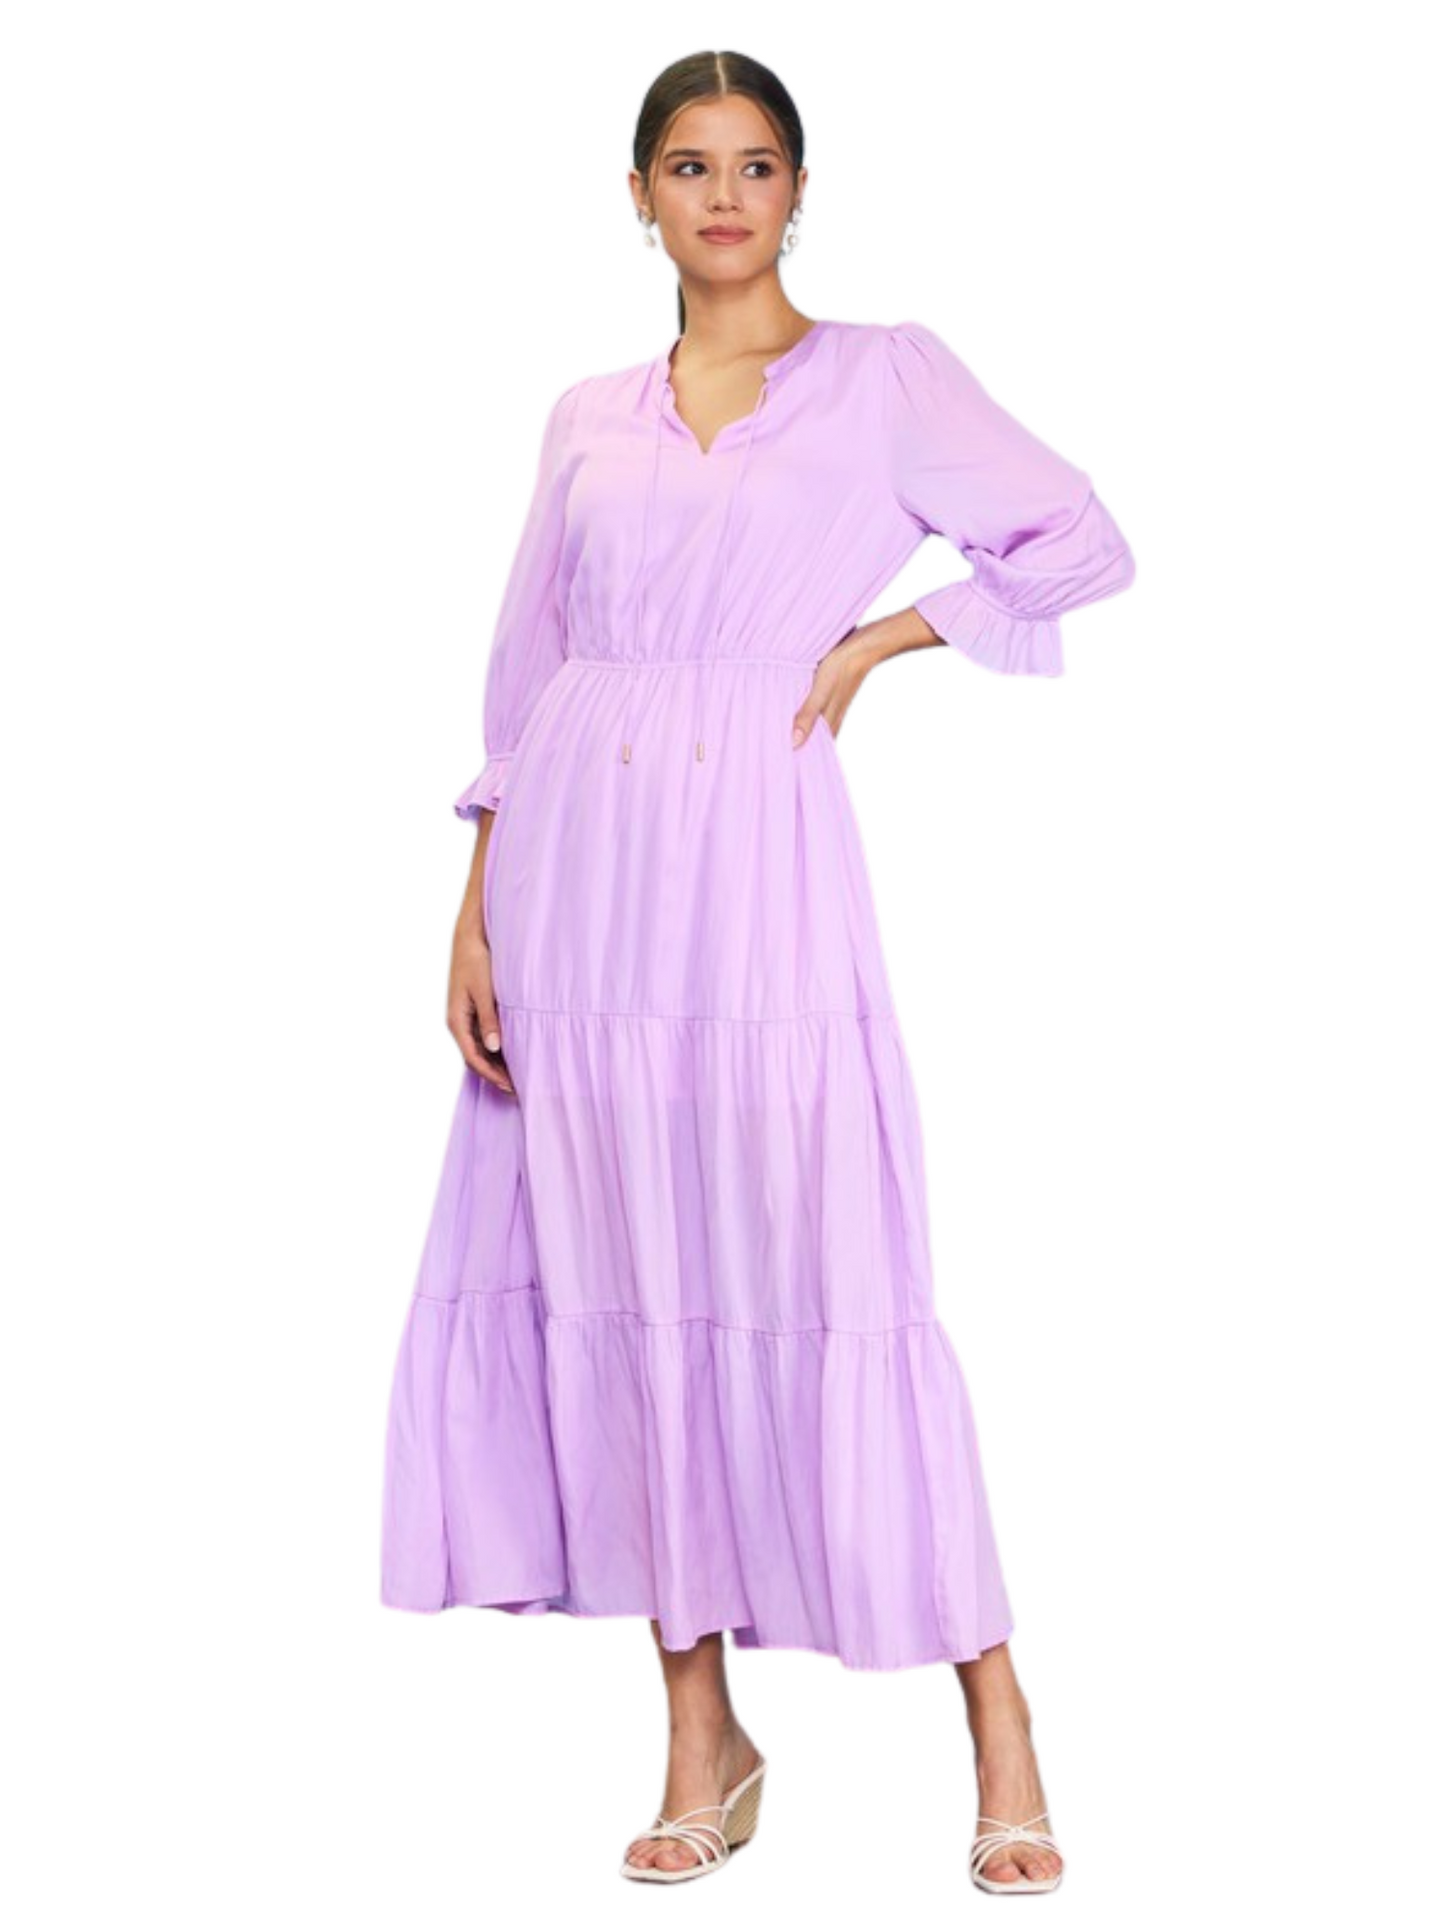 Marabella Dress - Lilac